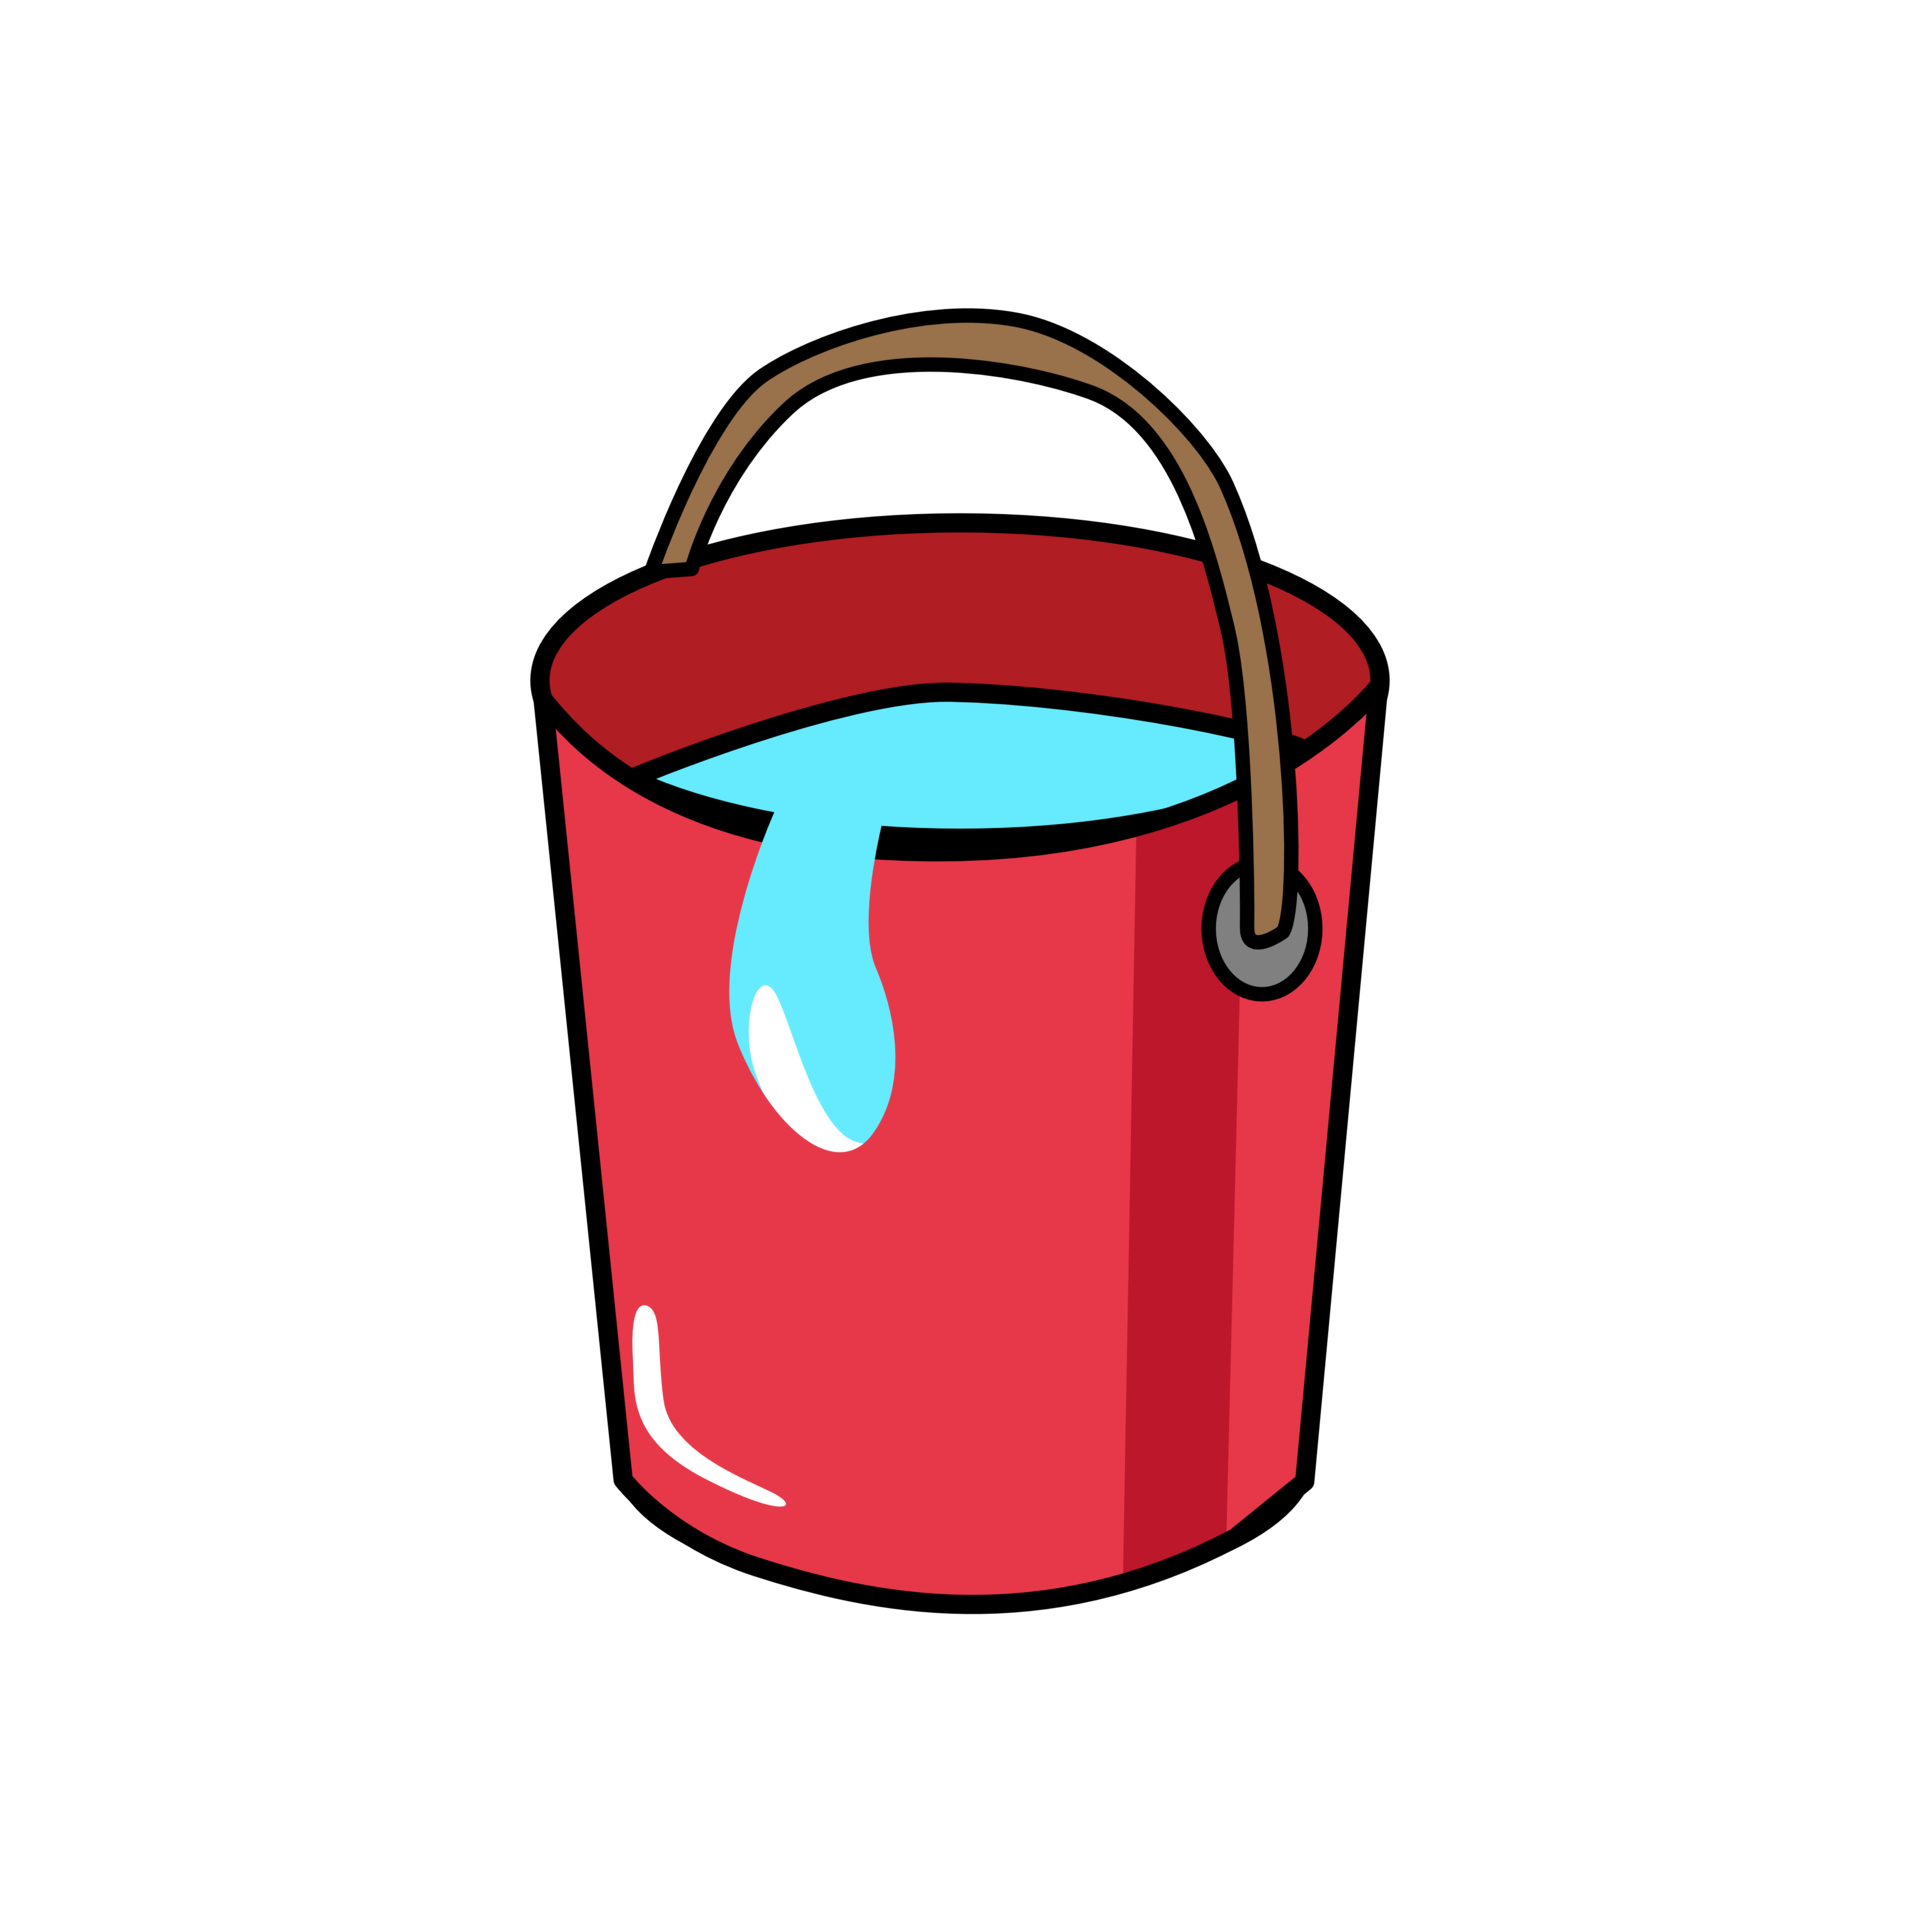 Bucket Water , bucket transparent background PNG clipart